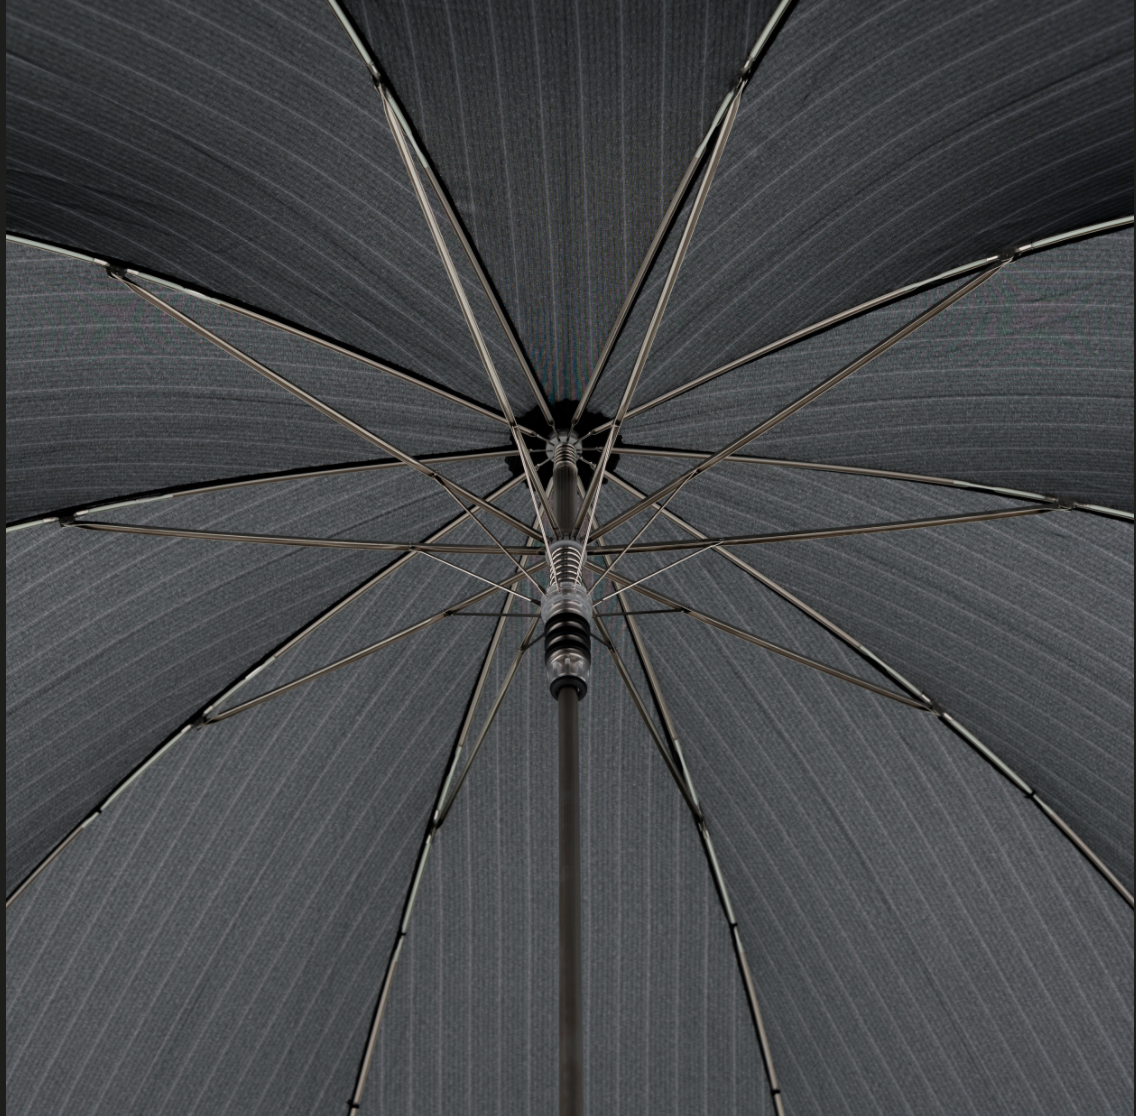 Knirps Long Automatic Flip Resistant Wooden Handle Umbrella – Black